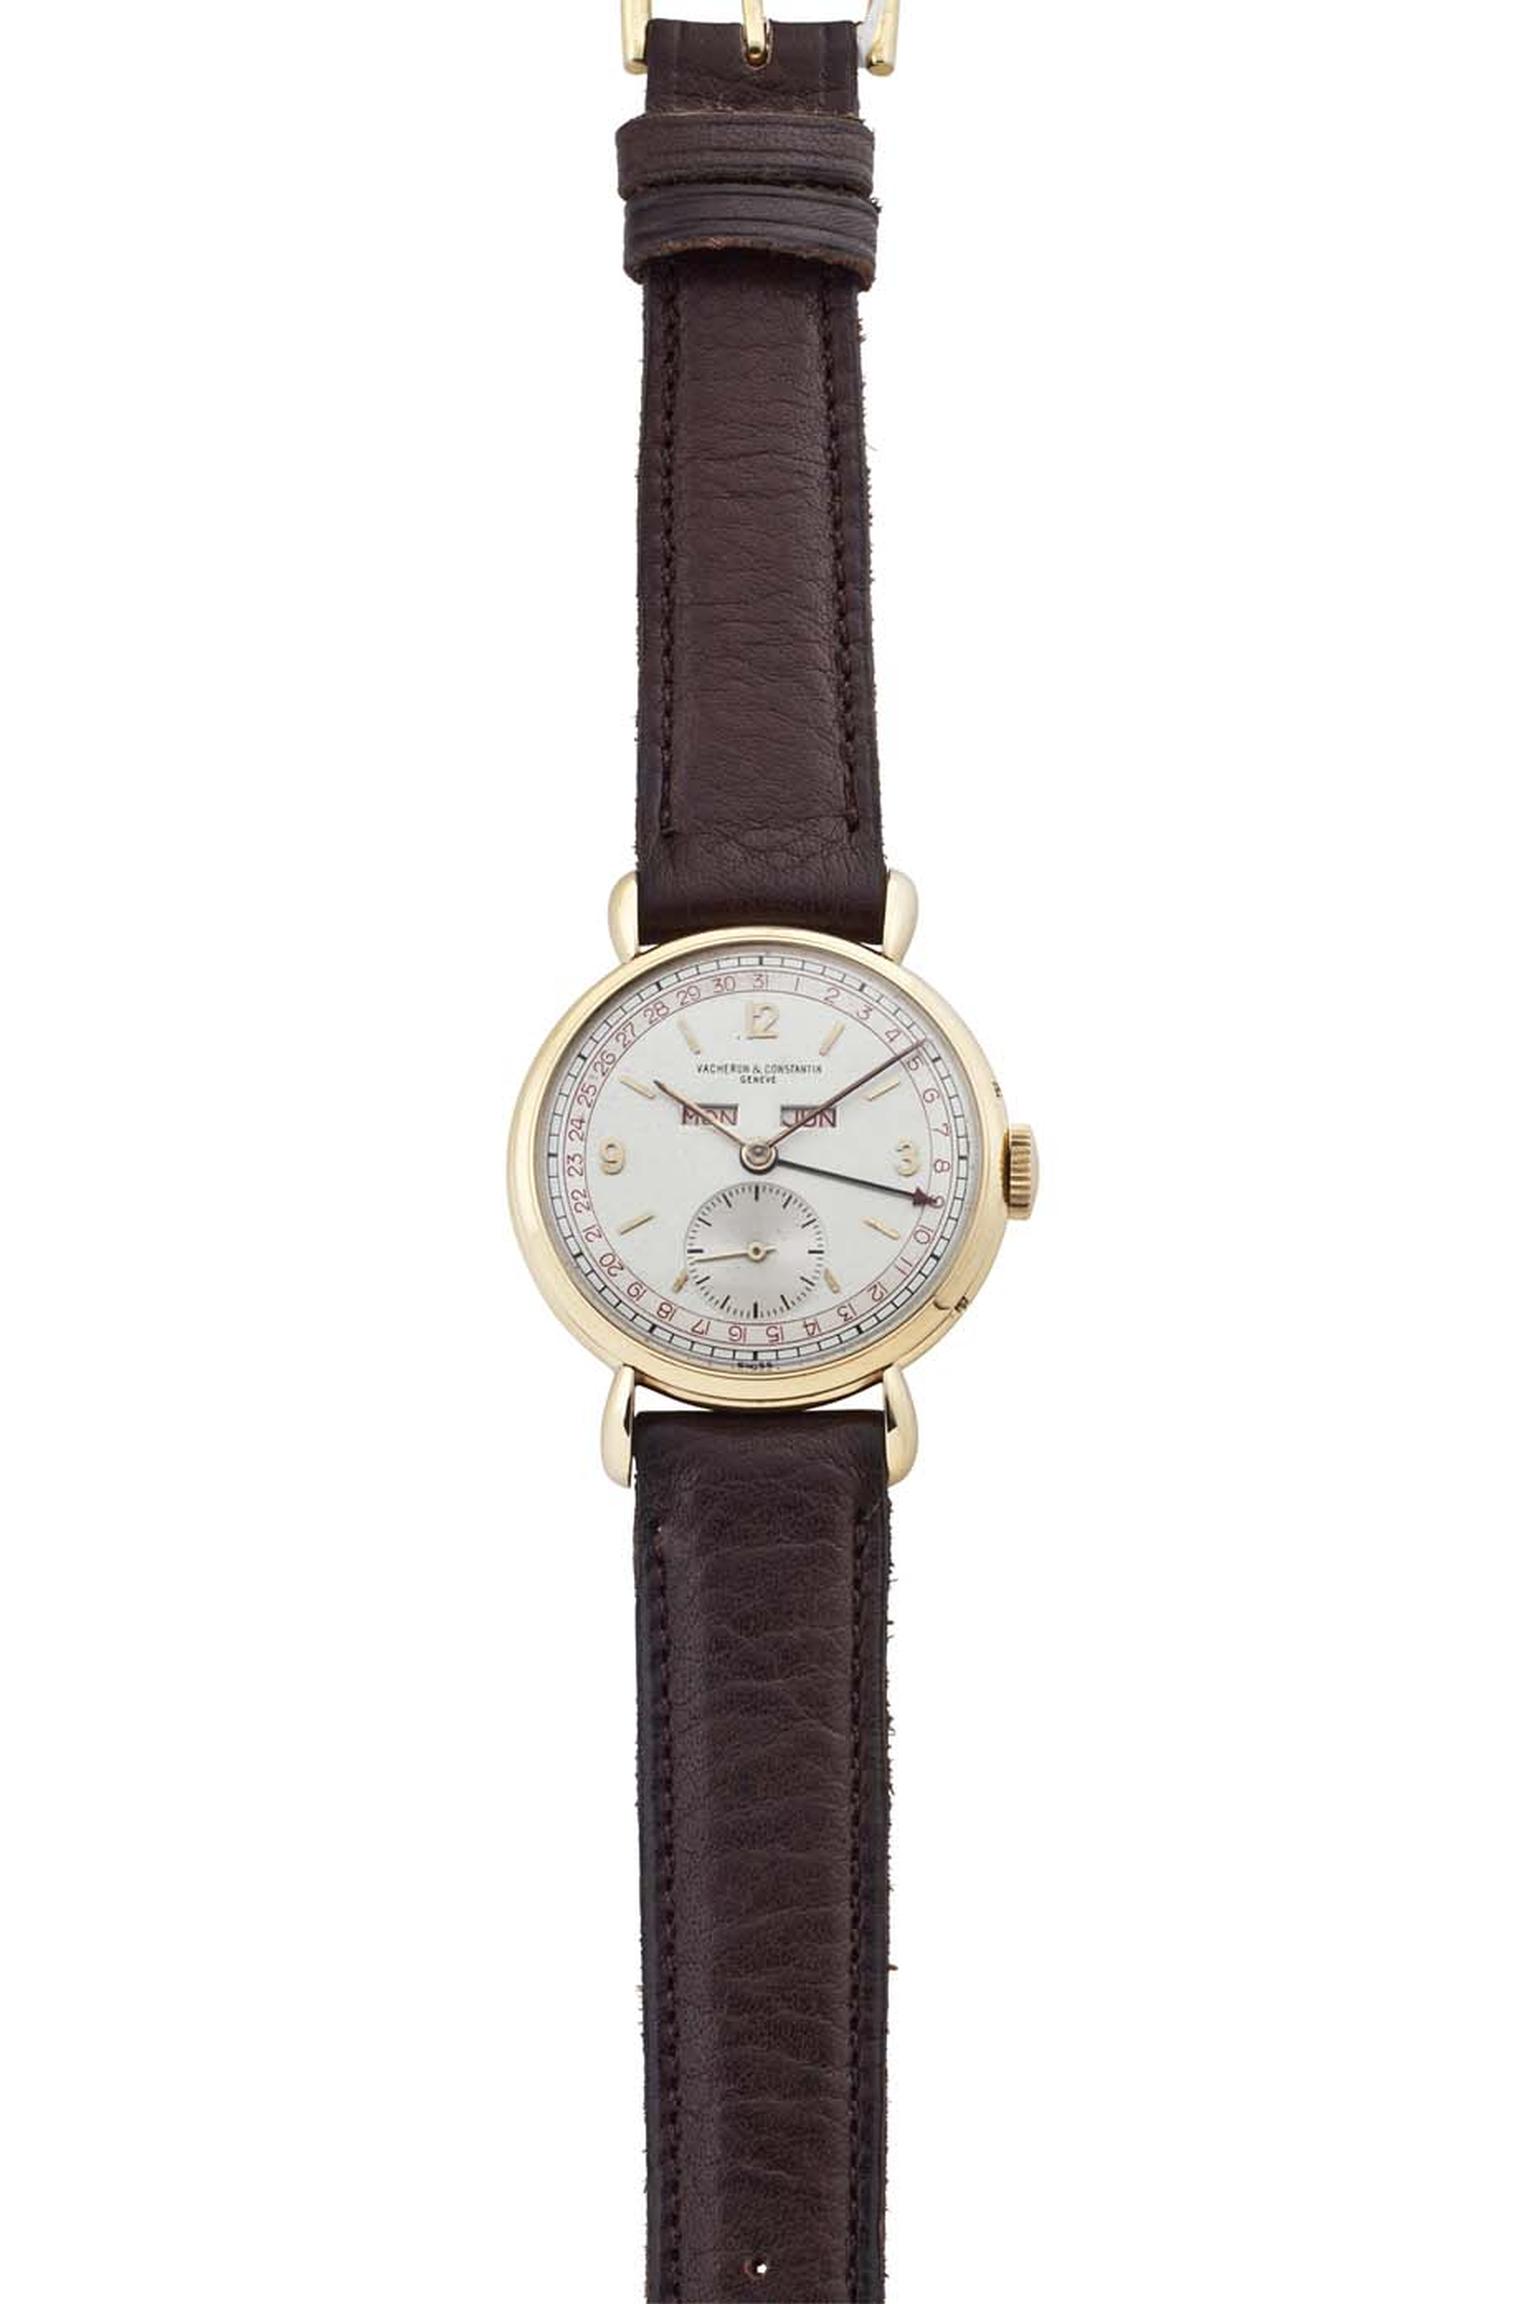 Christie's Watch Shop Vacheron Constantin yellow gold triple date wristwatch ($16,800).